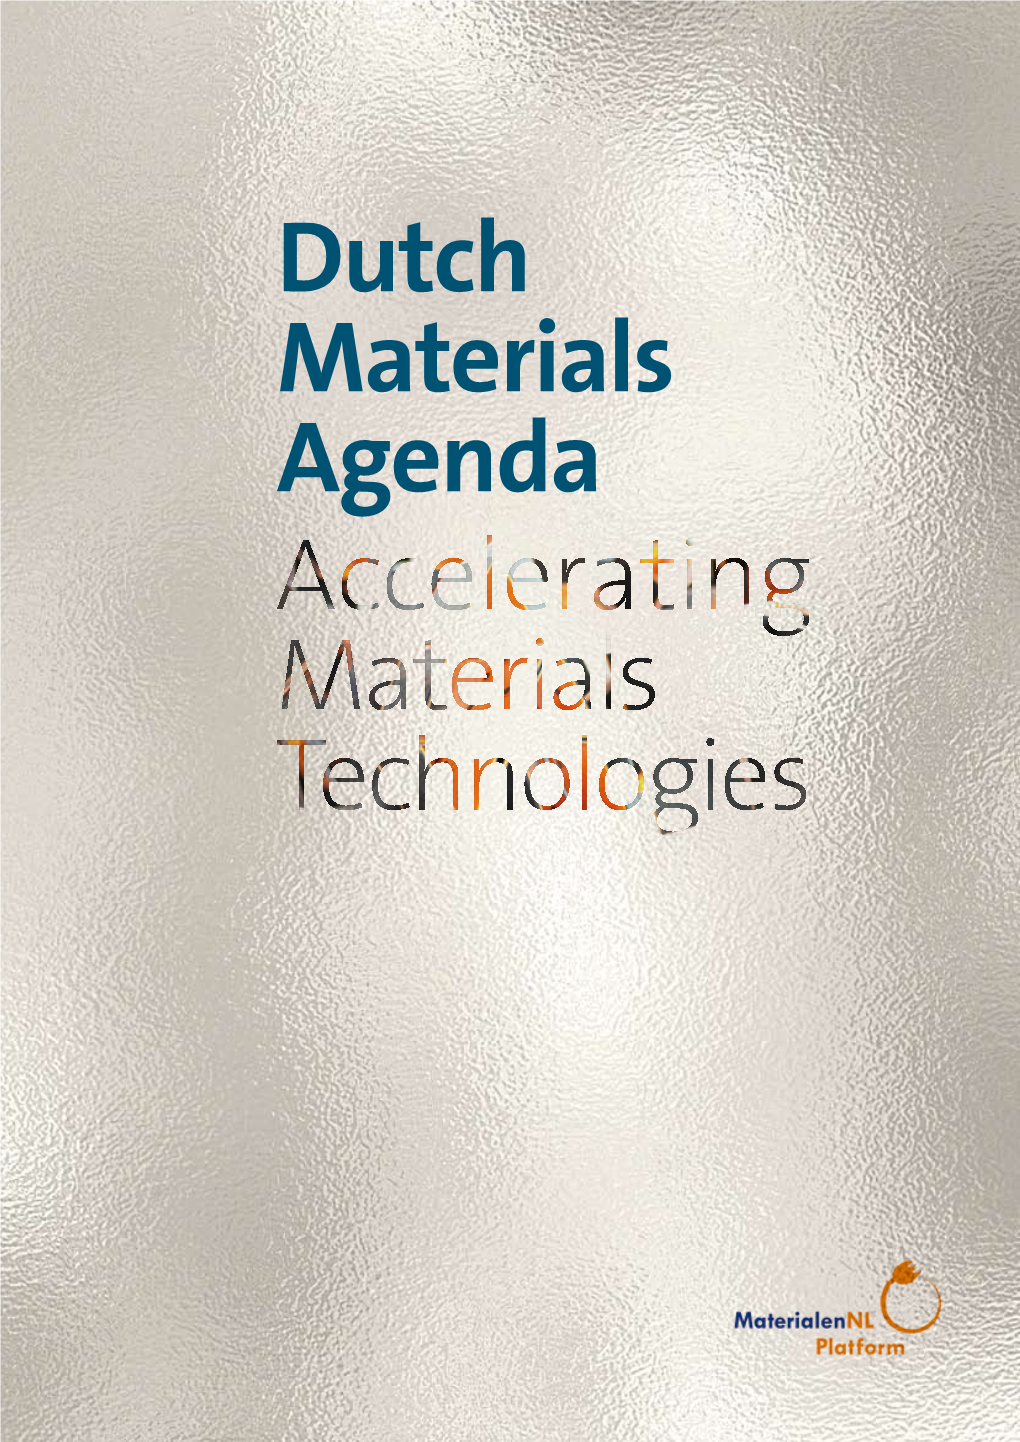 Dutch Materials Agenda Content